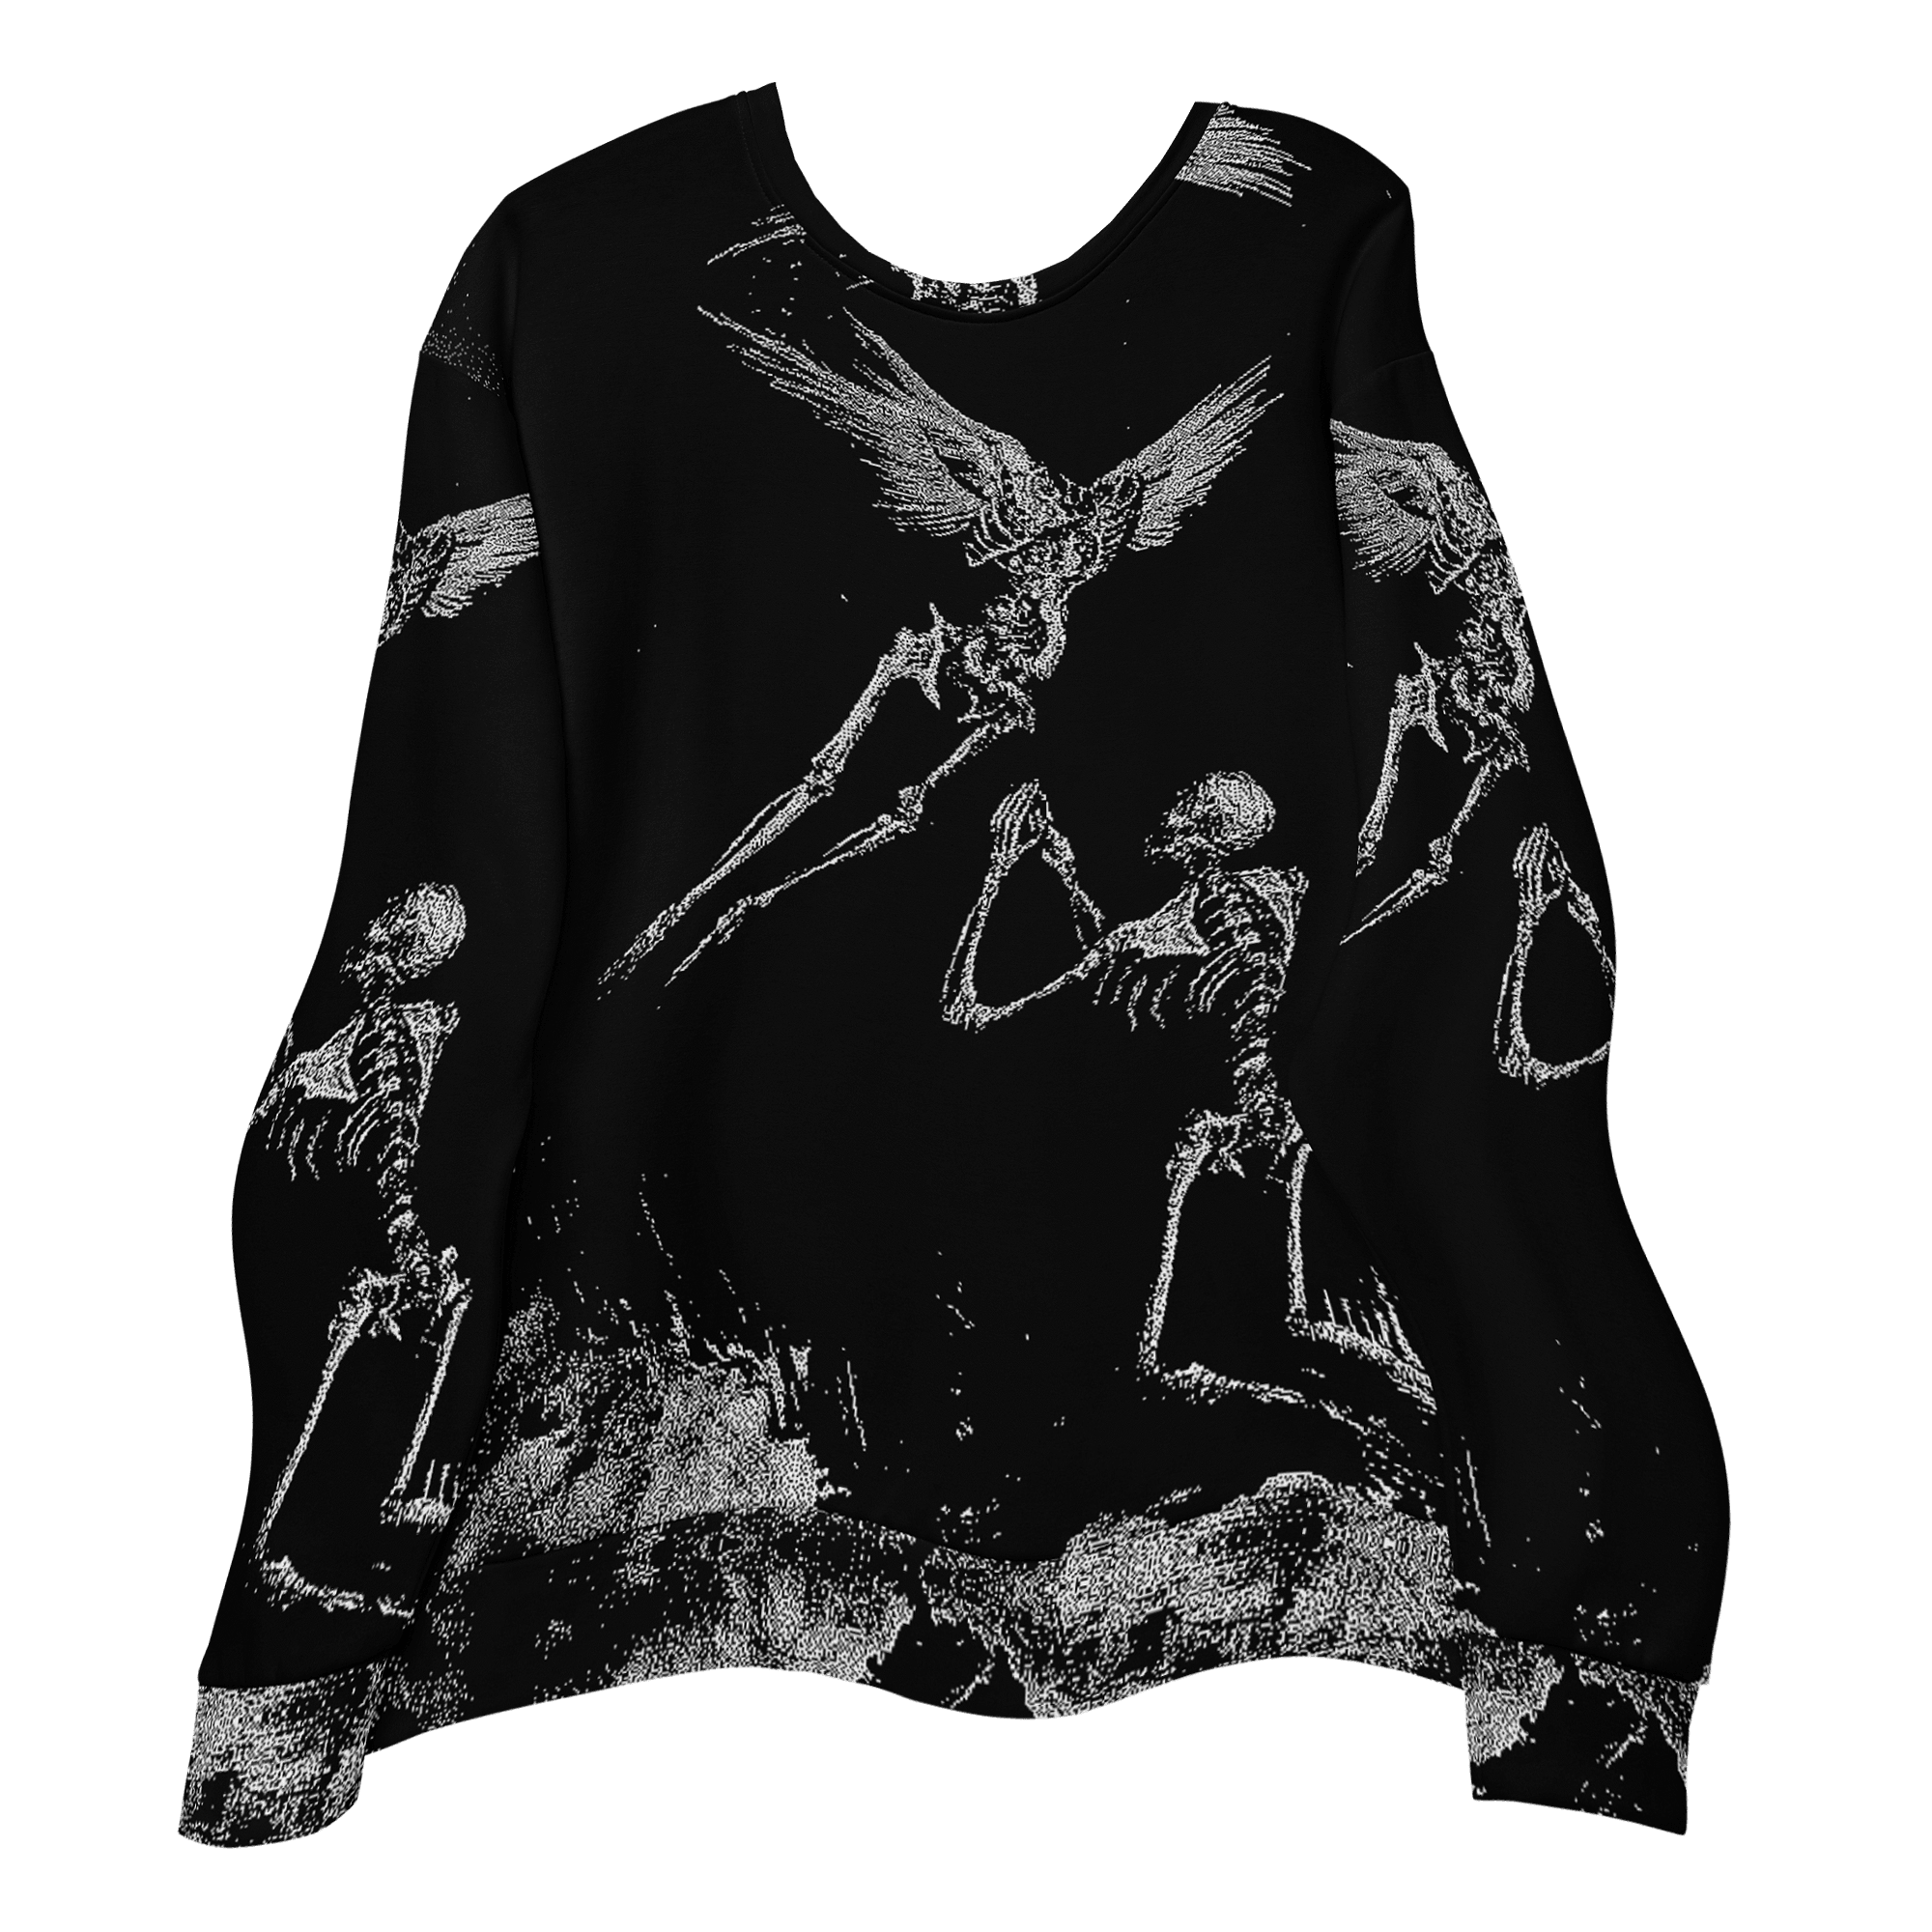 PLEASE® Unisex Sweatshirt (7 pieces for sale) - Kikillo Club